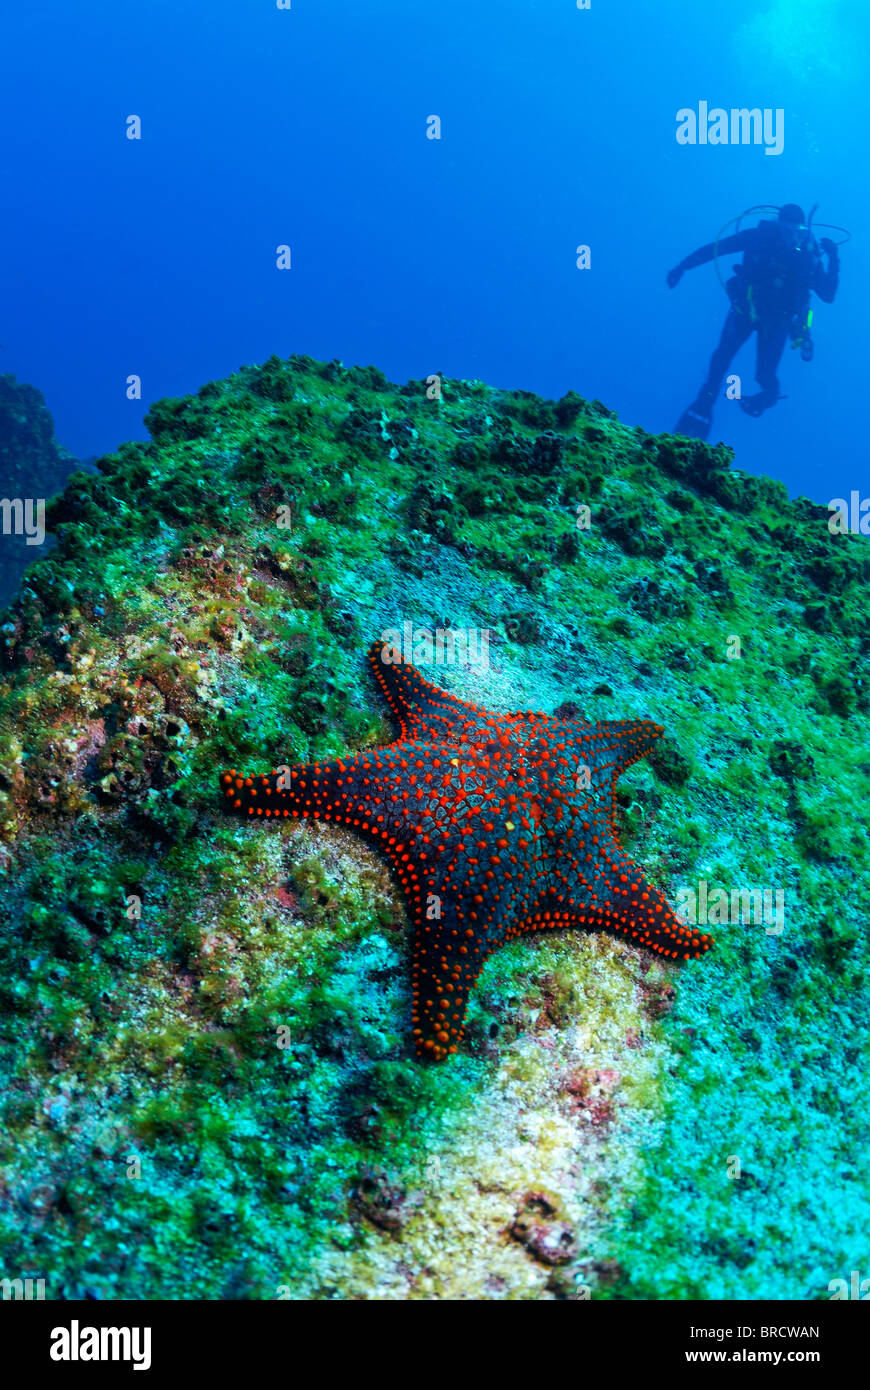 Cuscino Panamic Starfish (Pentaceraster cumingi) su roccia, Scuba Diver in background, subacquea sull'Arcipelago delle Galapagos Foto Stock